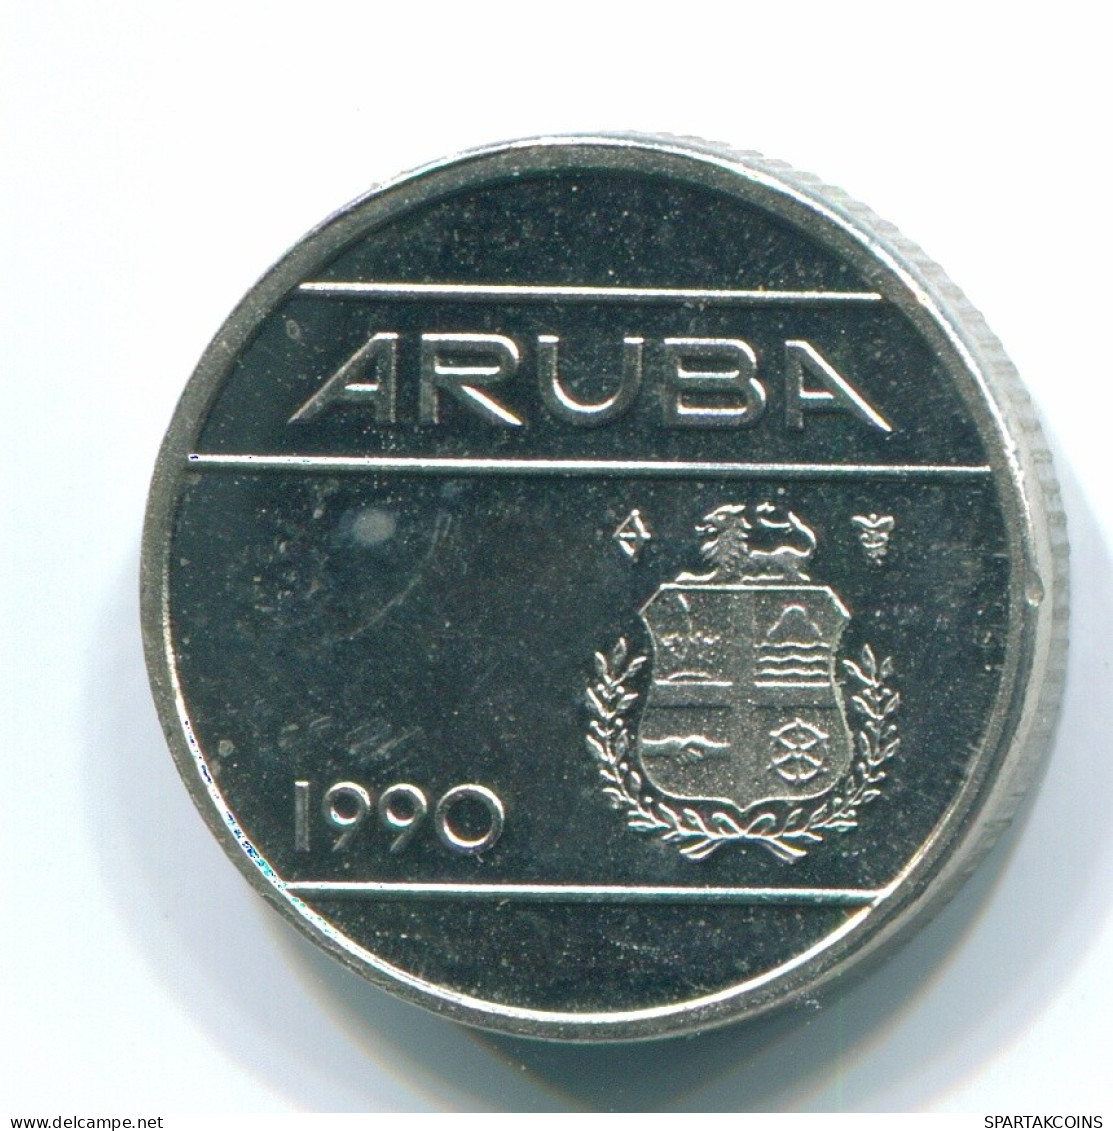 10 CENTS 1990 ARUBA (NEERLANDÉS NETHERLANDS) Nickel Colonial Moneda #S13629.E.A - Aruba